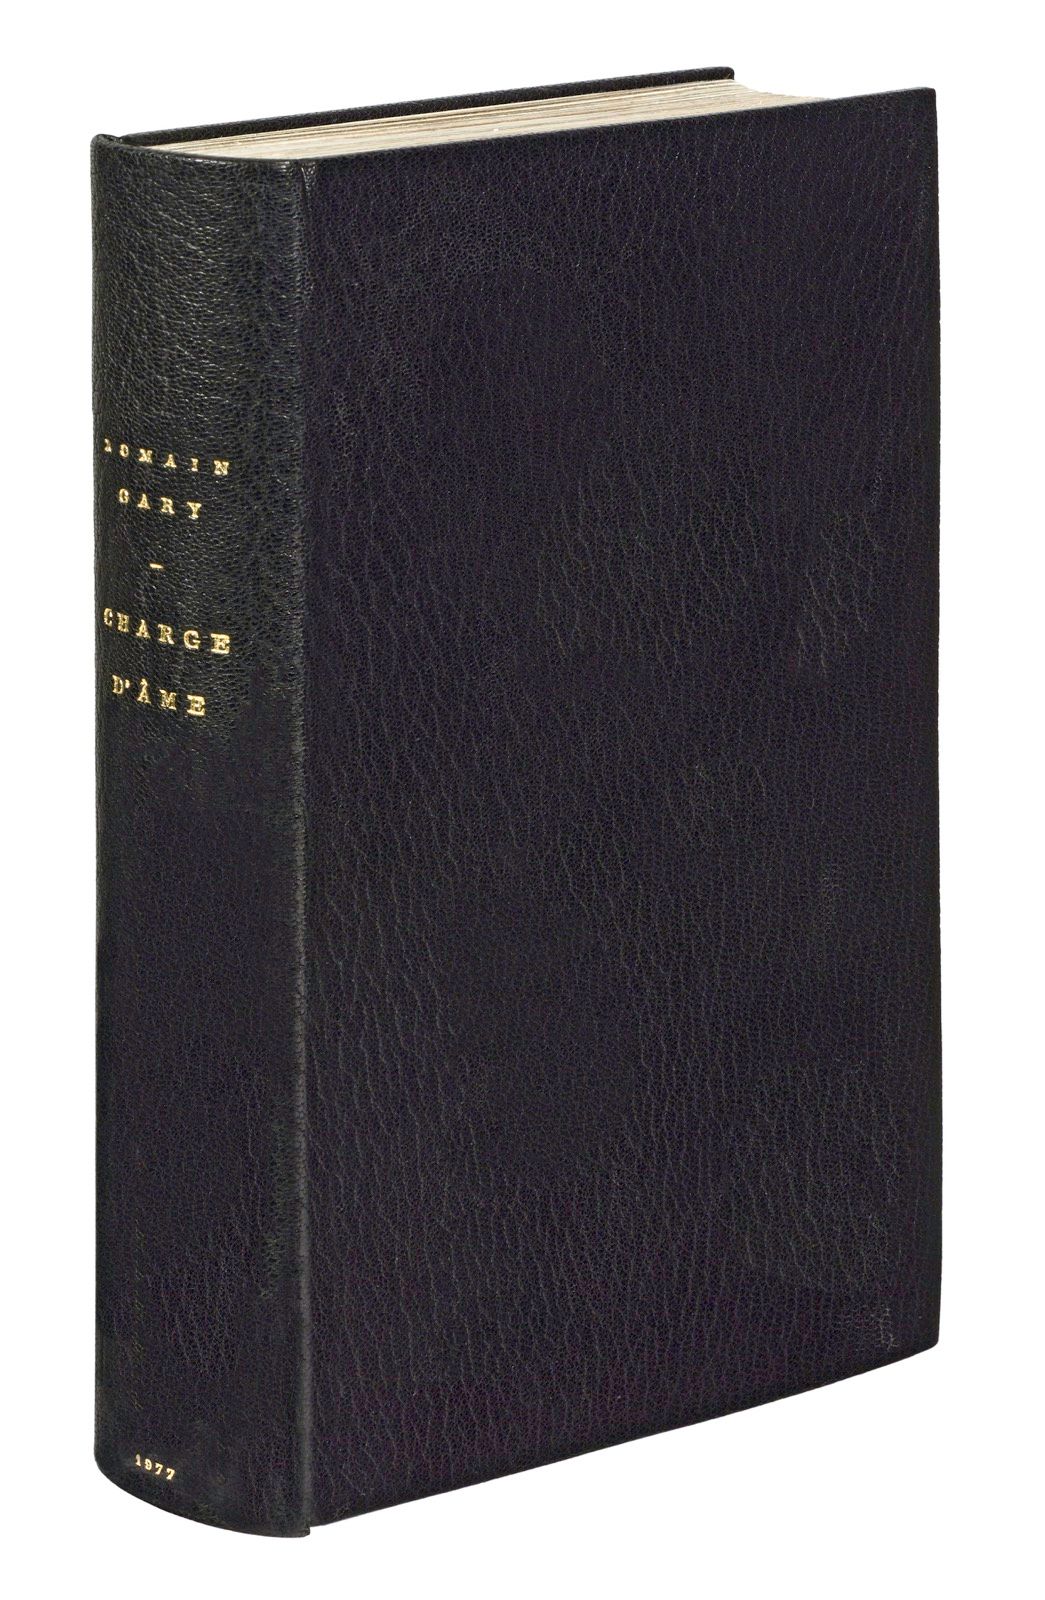 GARY (Romain). Charge d'âme. Paris, Gallimard, 1977. In-8, black jansenist moroc&hellip;